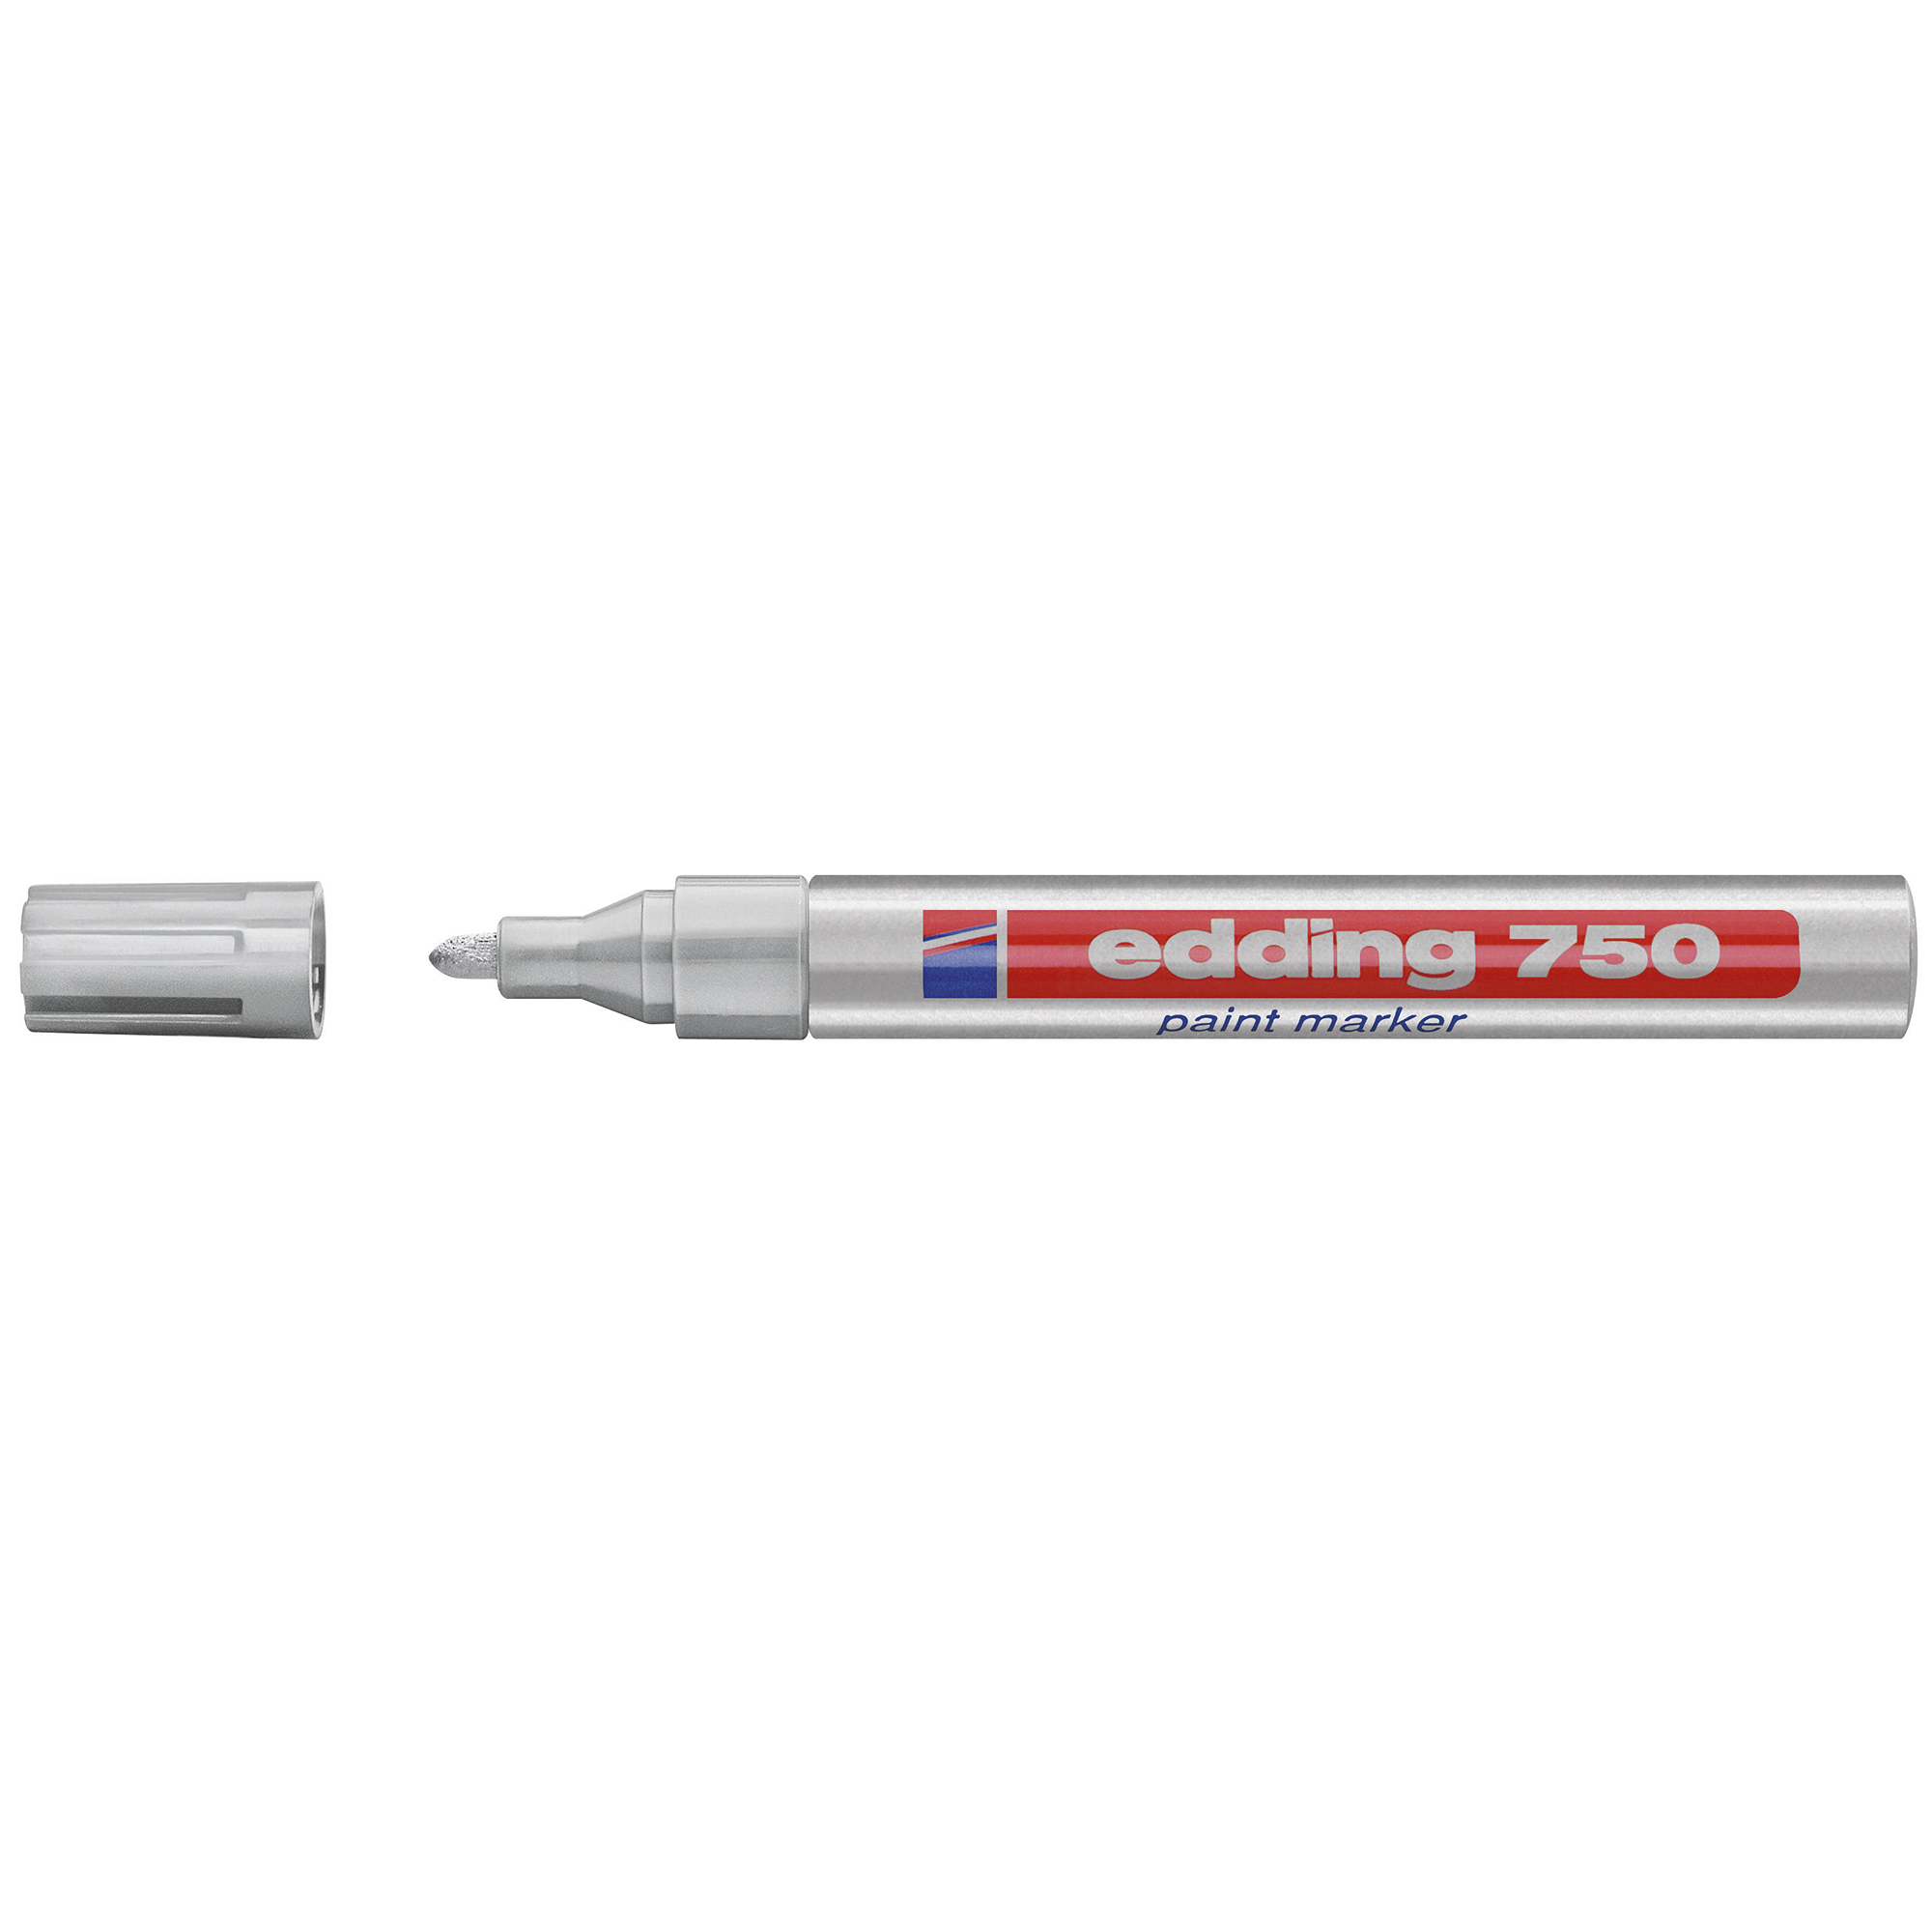 Нестираемый маркер по металлу. Маркер Edding 750. Маркер Paint Marker Edding 750 по металлу. Edding e-750. Маркер Edding 750 белый.